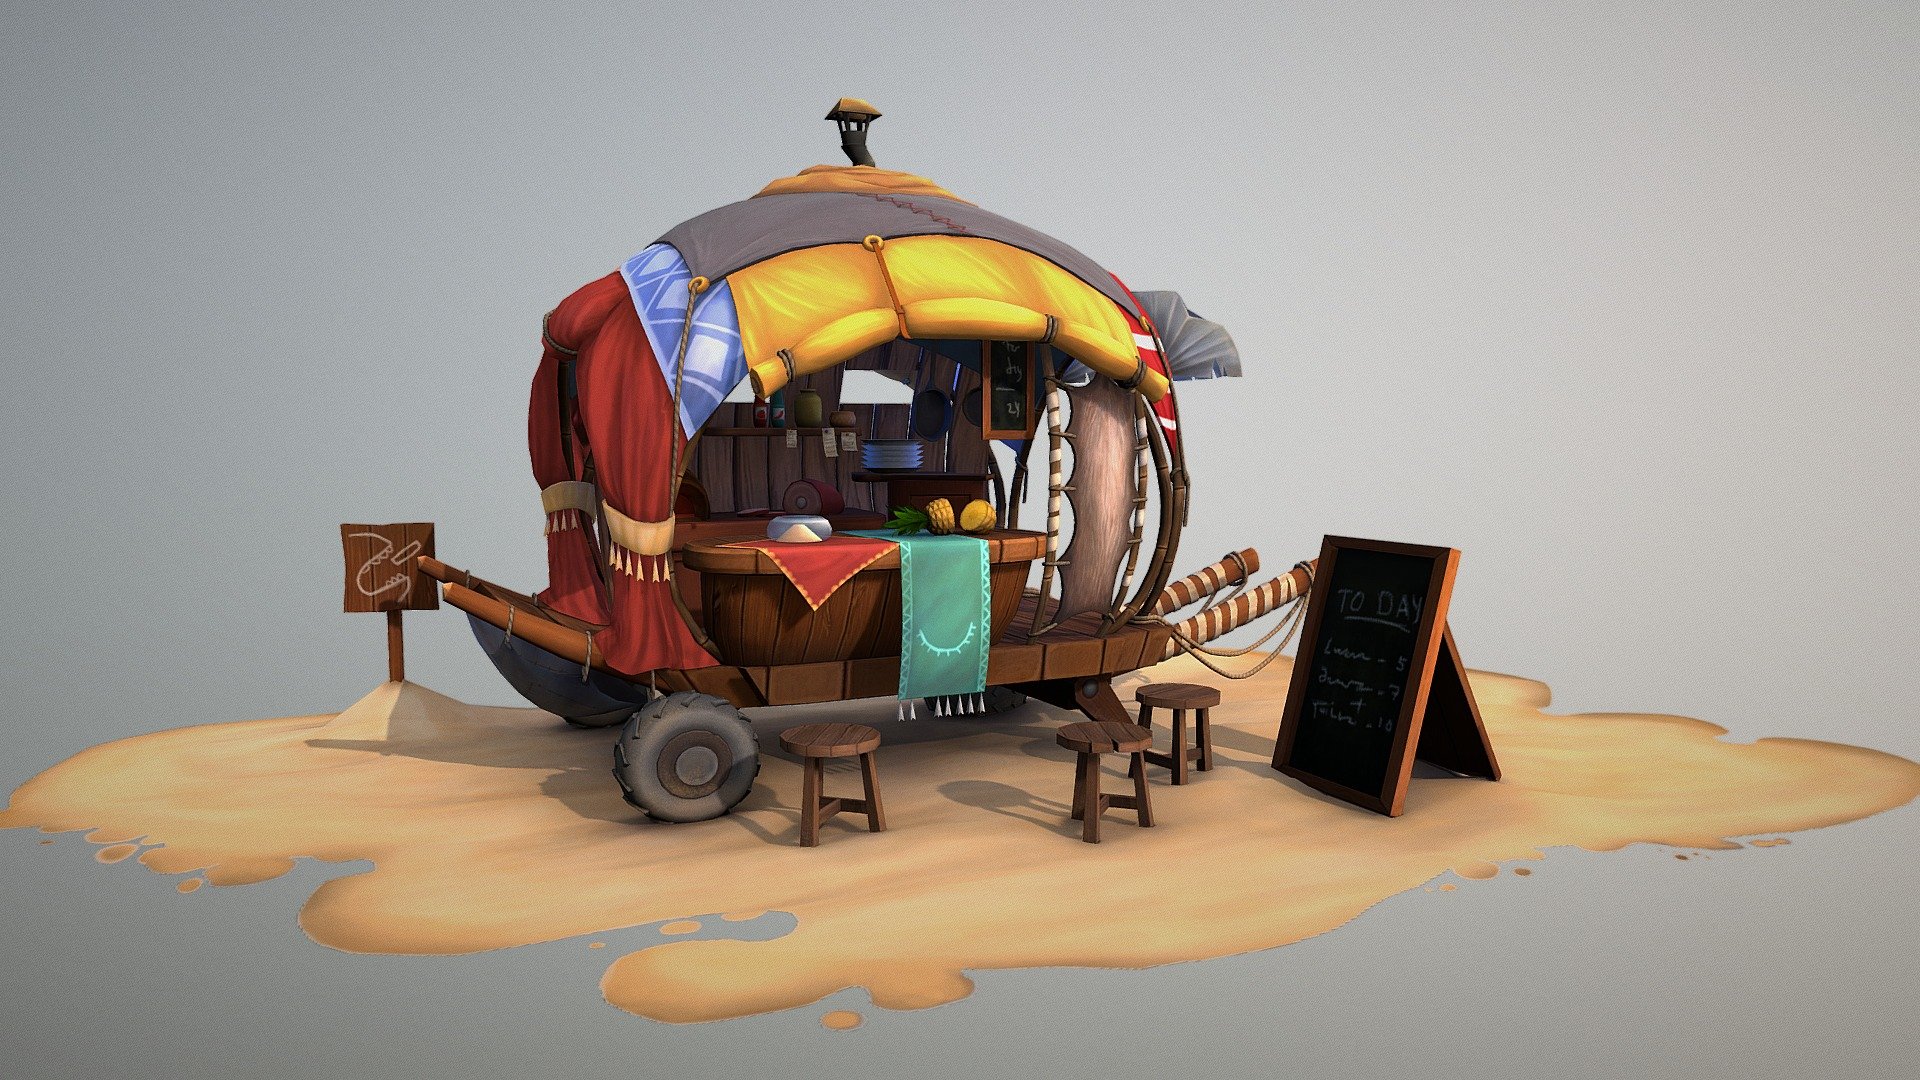 Original concept:
https://www.artstation.com/artwork/KE48W - Snack wagon - 3D model by Marina_Ukhnalyova 3d model